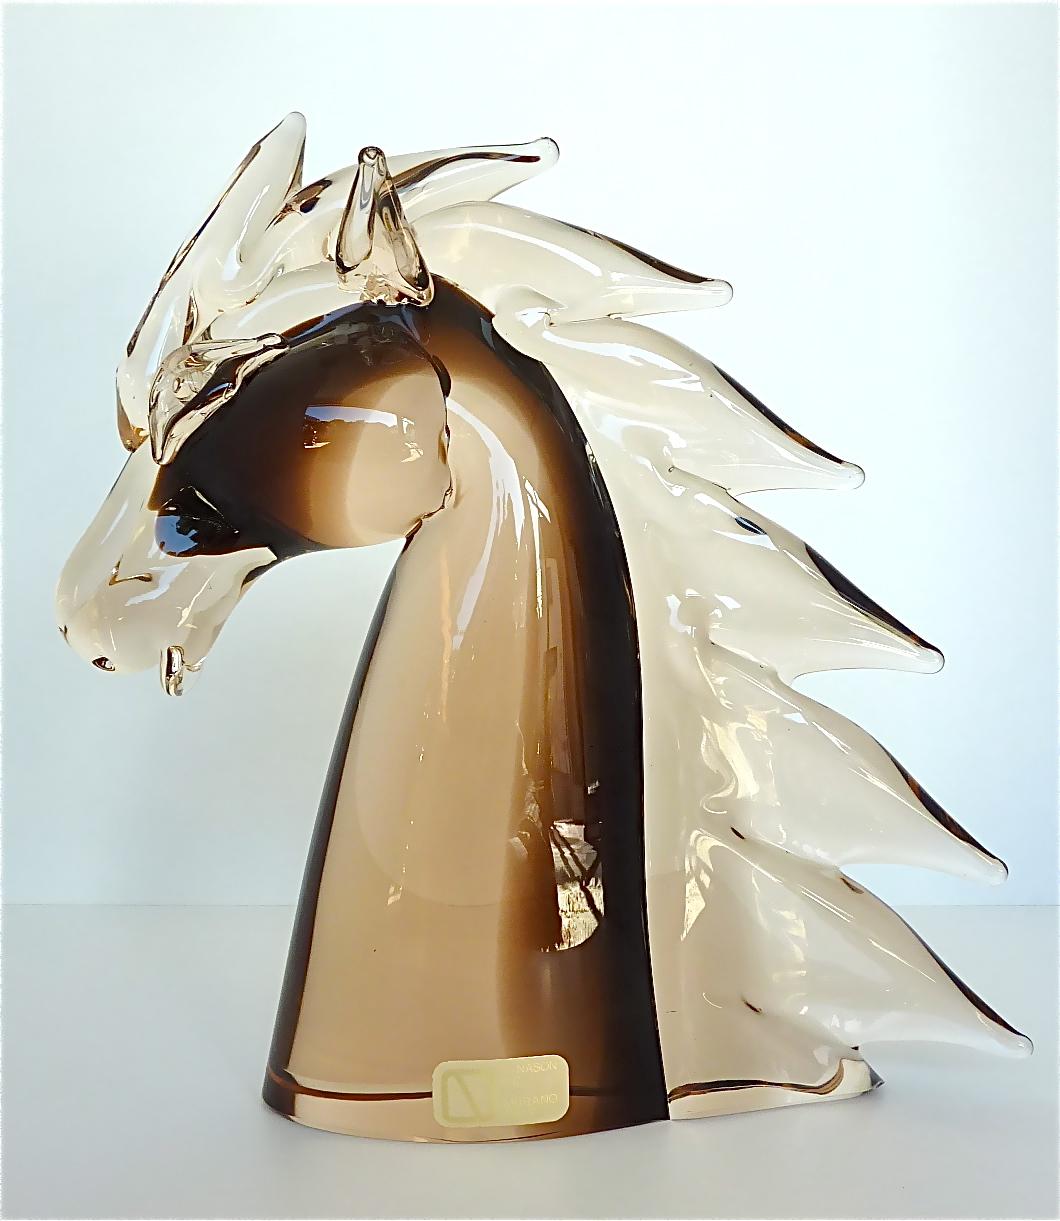 murano glass horse head